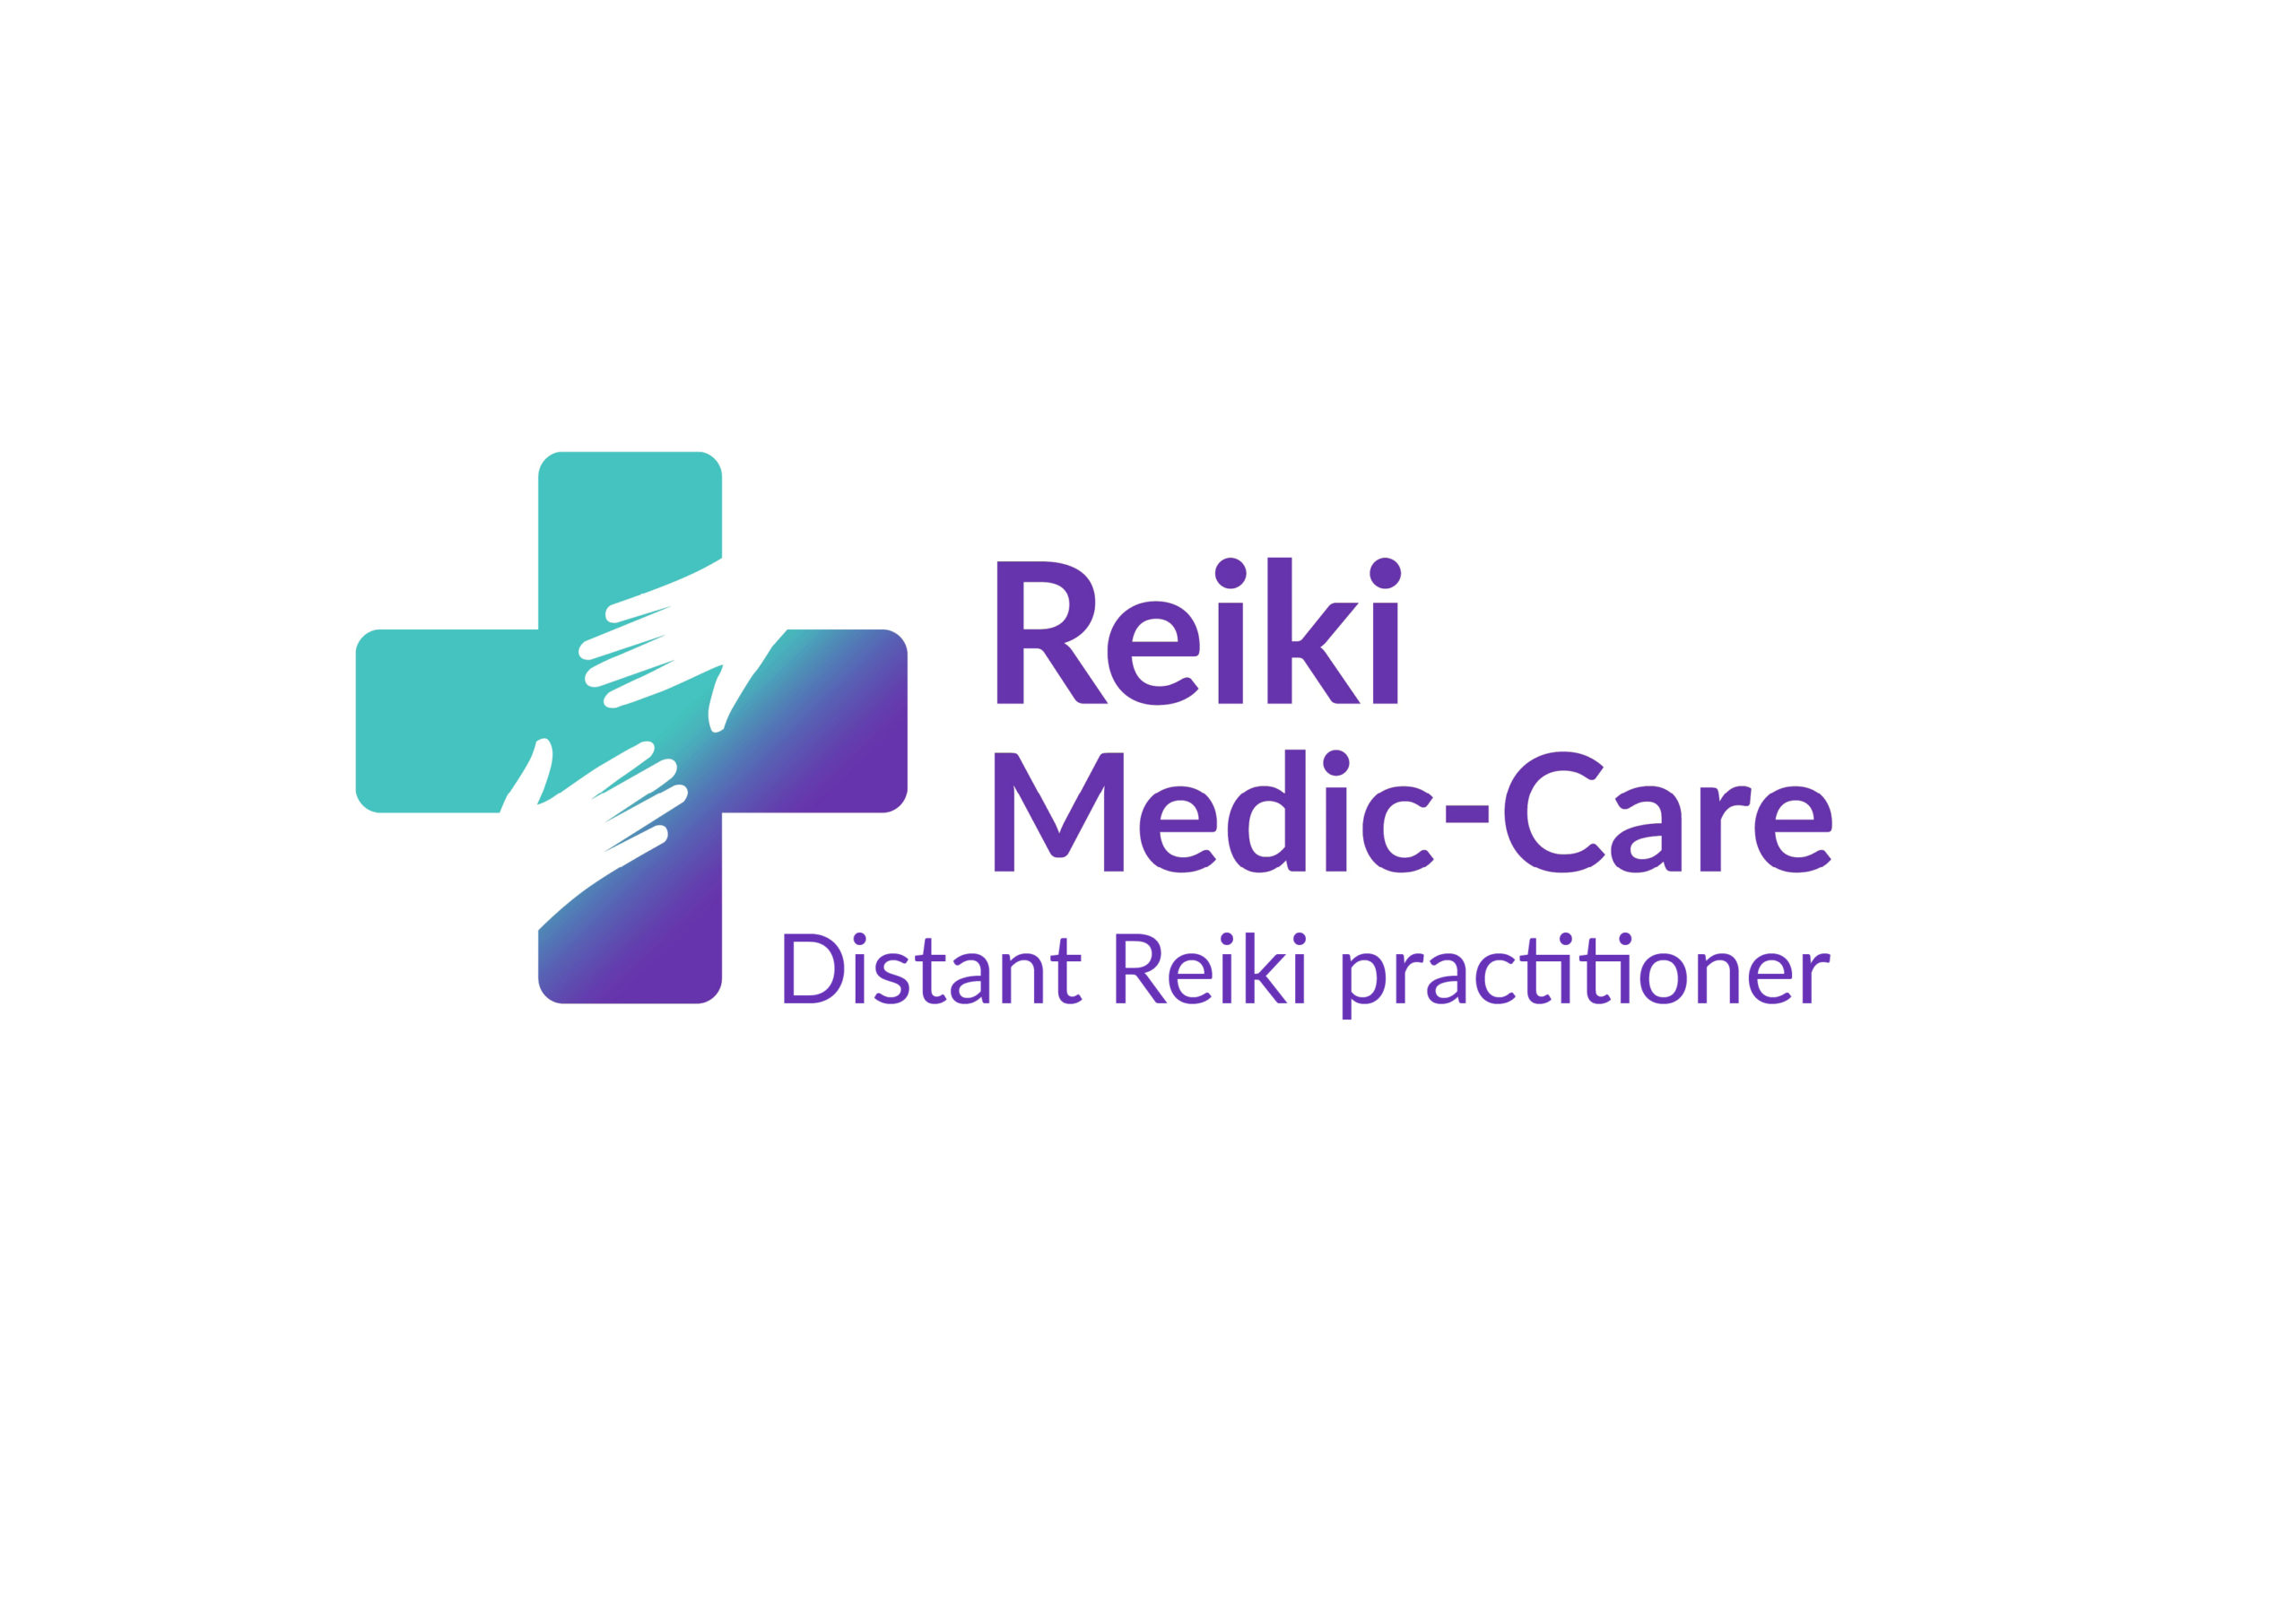 Reiki Medic-Care – Preliminary Research Results